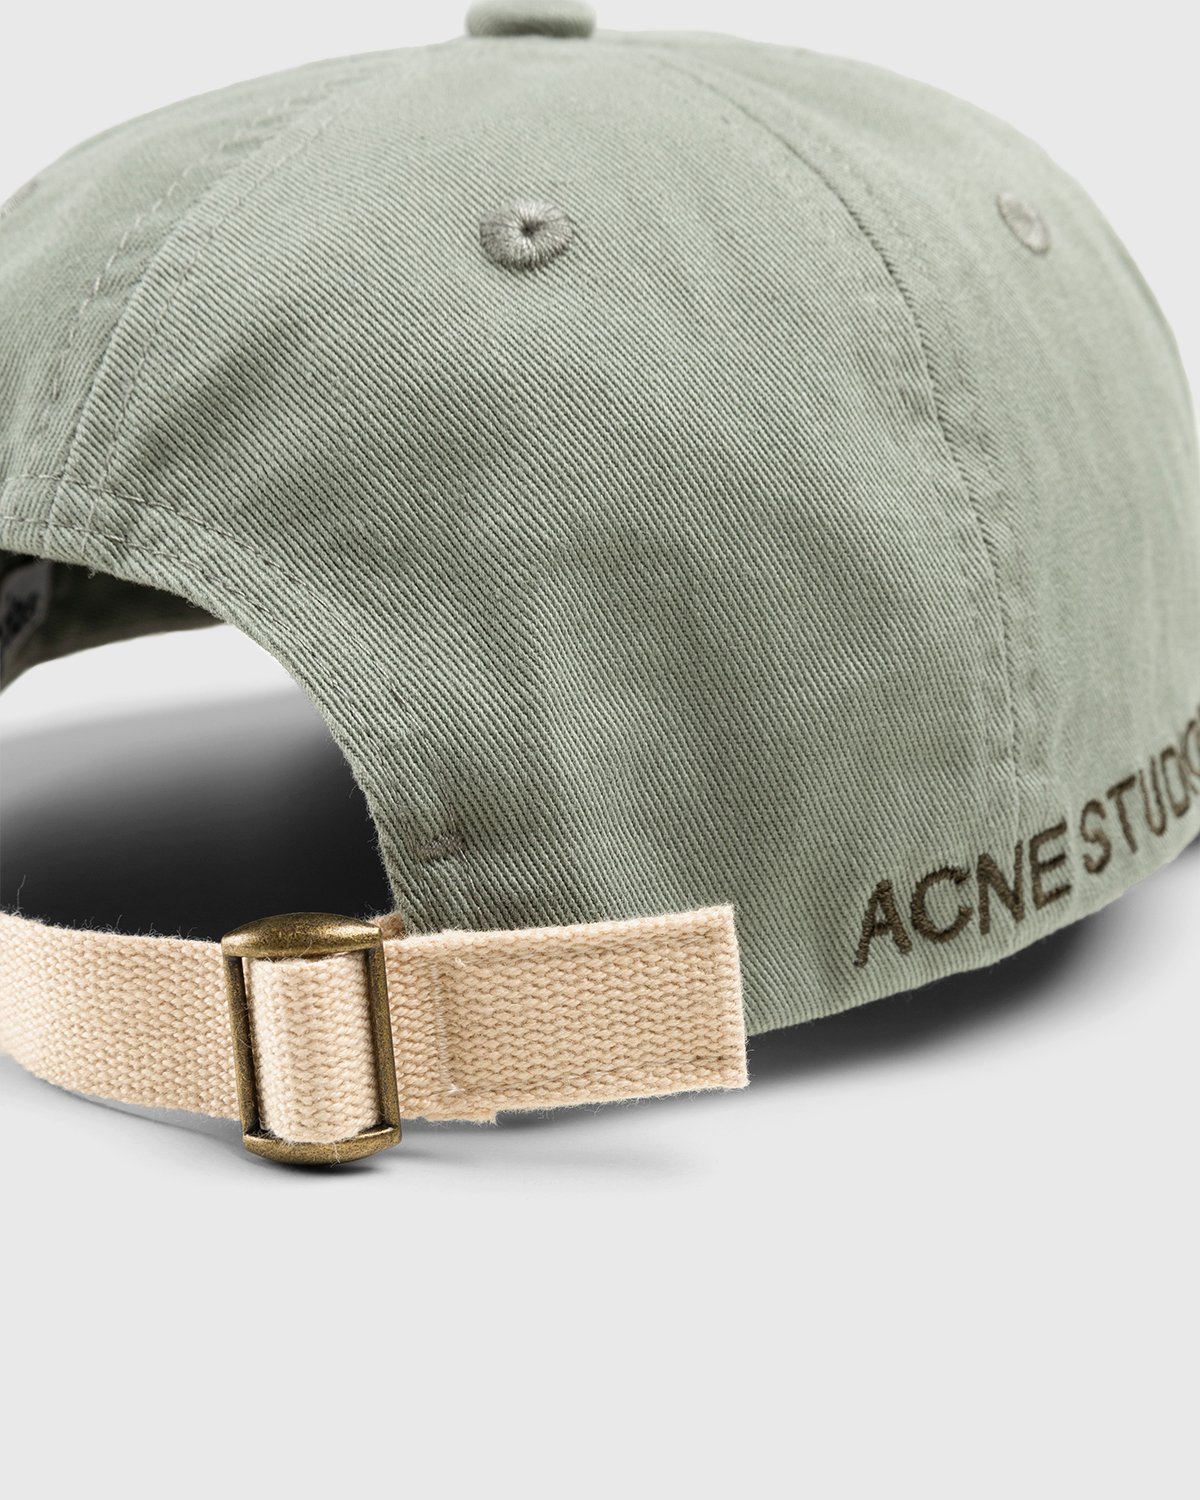 Acne Studios - Cotton Baseball Cap Sage Green - Accessories - Green - Image 4